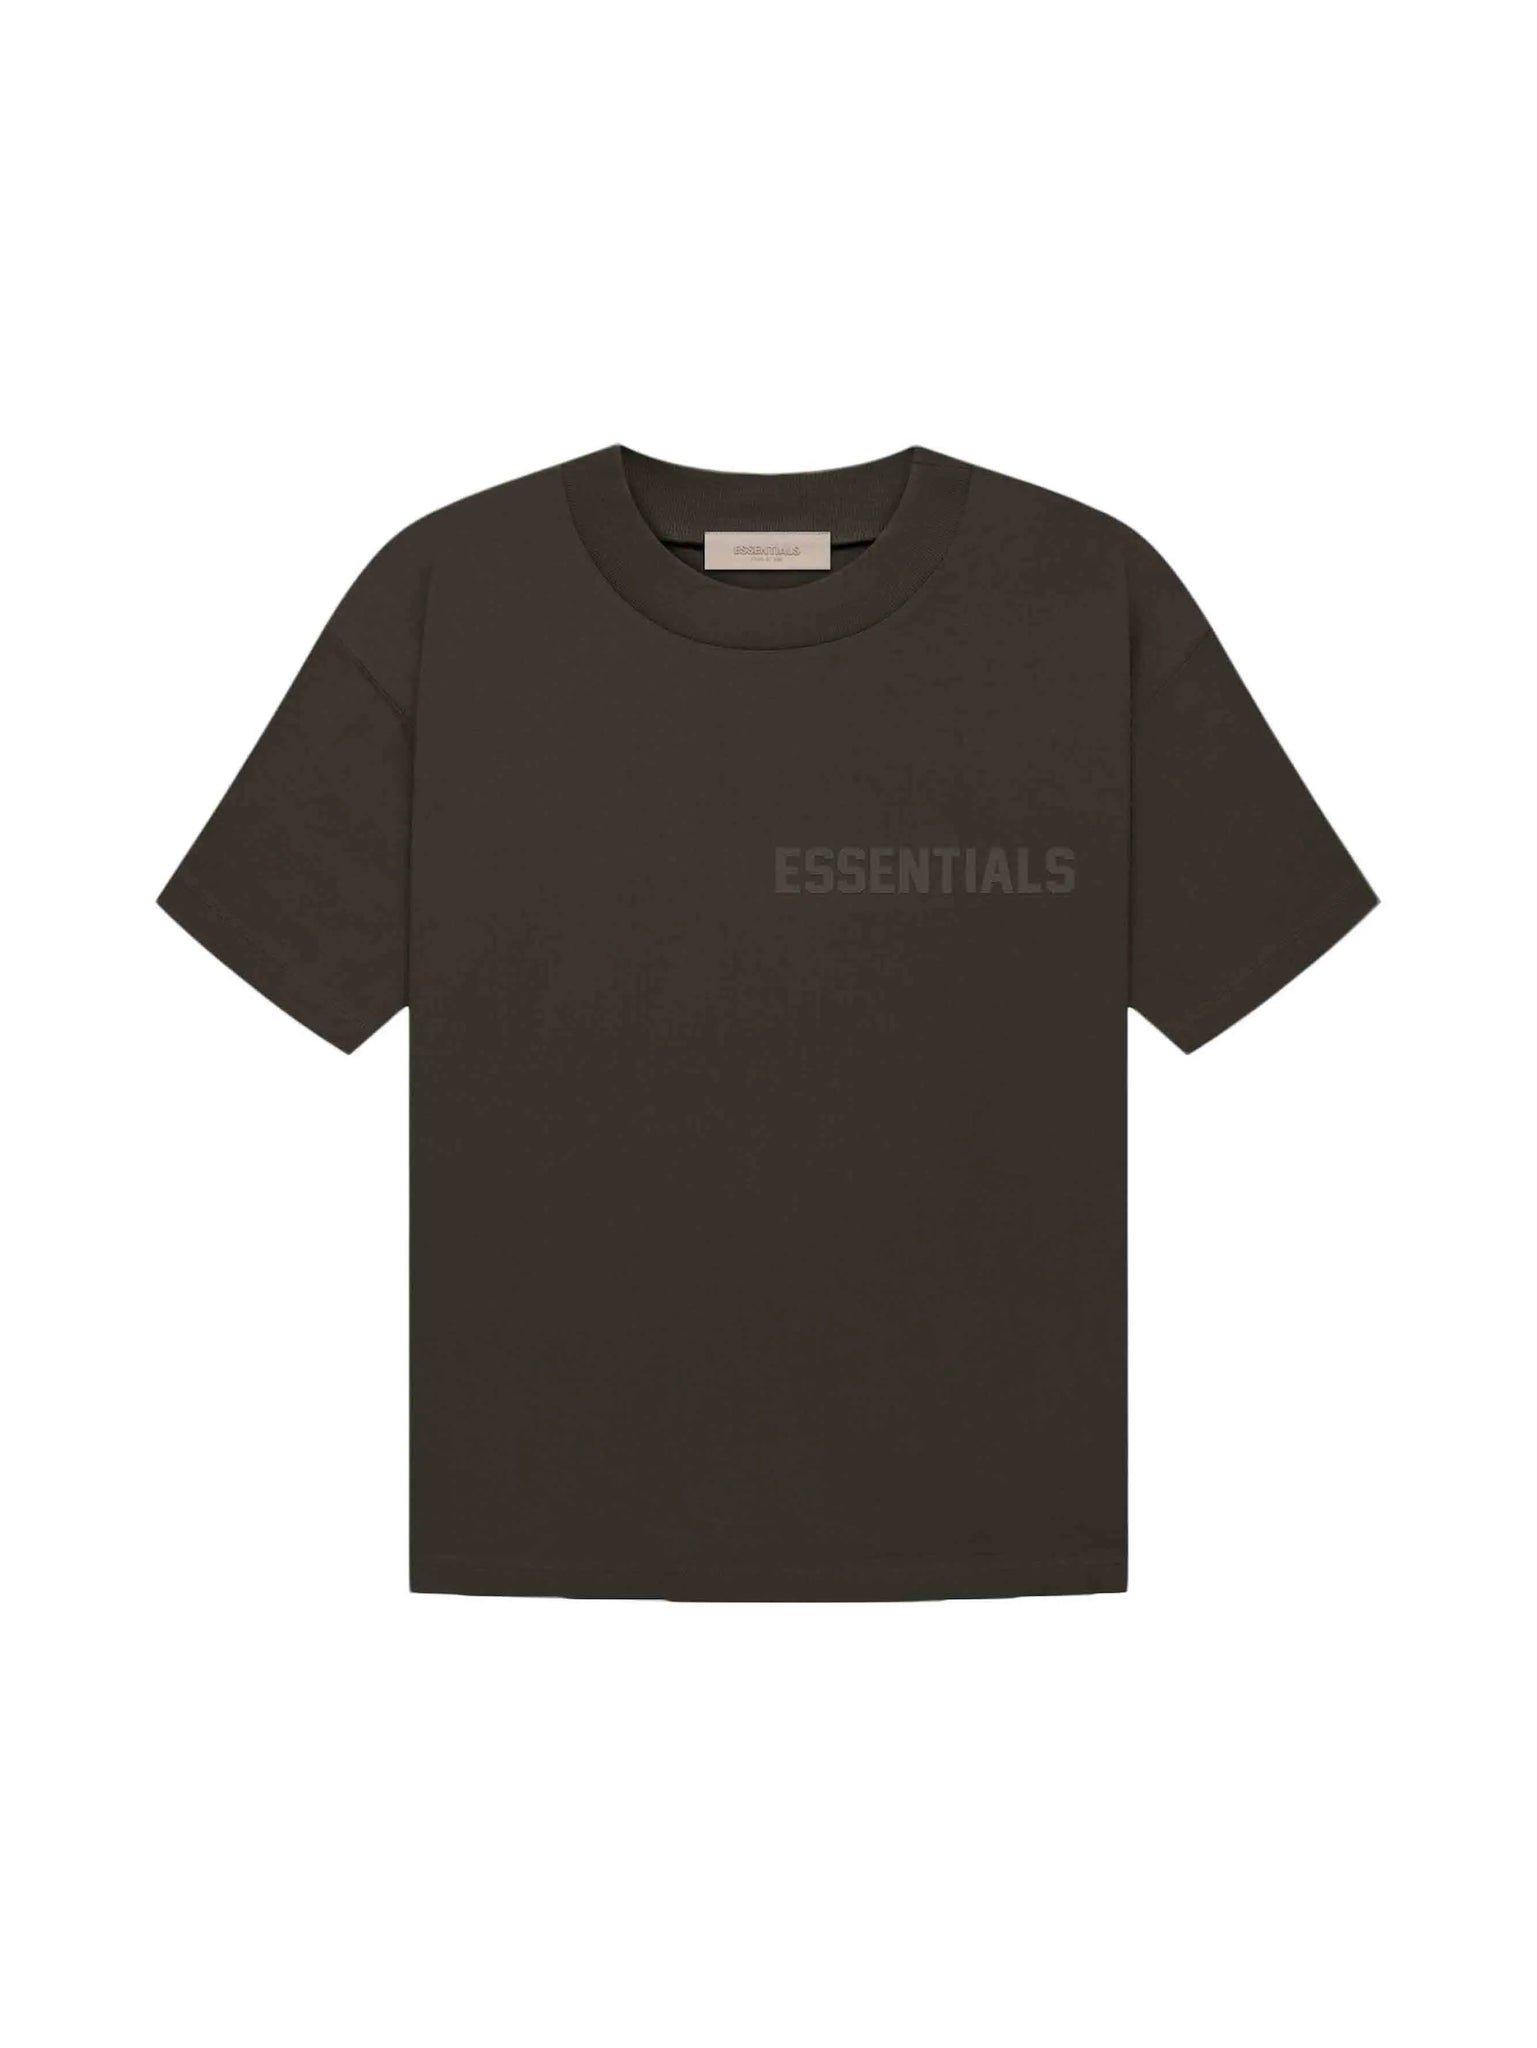 Fear of God Essentials T-shirt Off Black - Prior